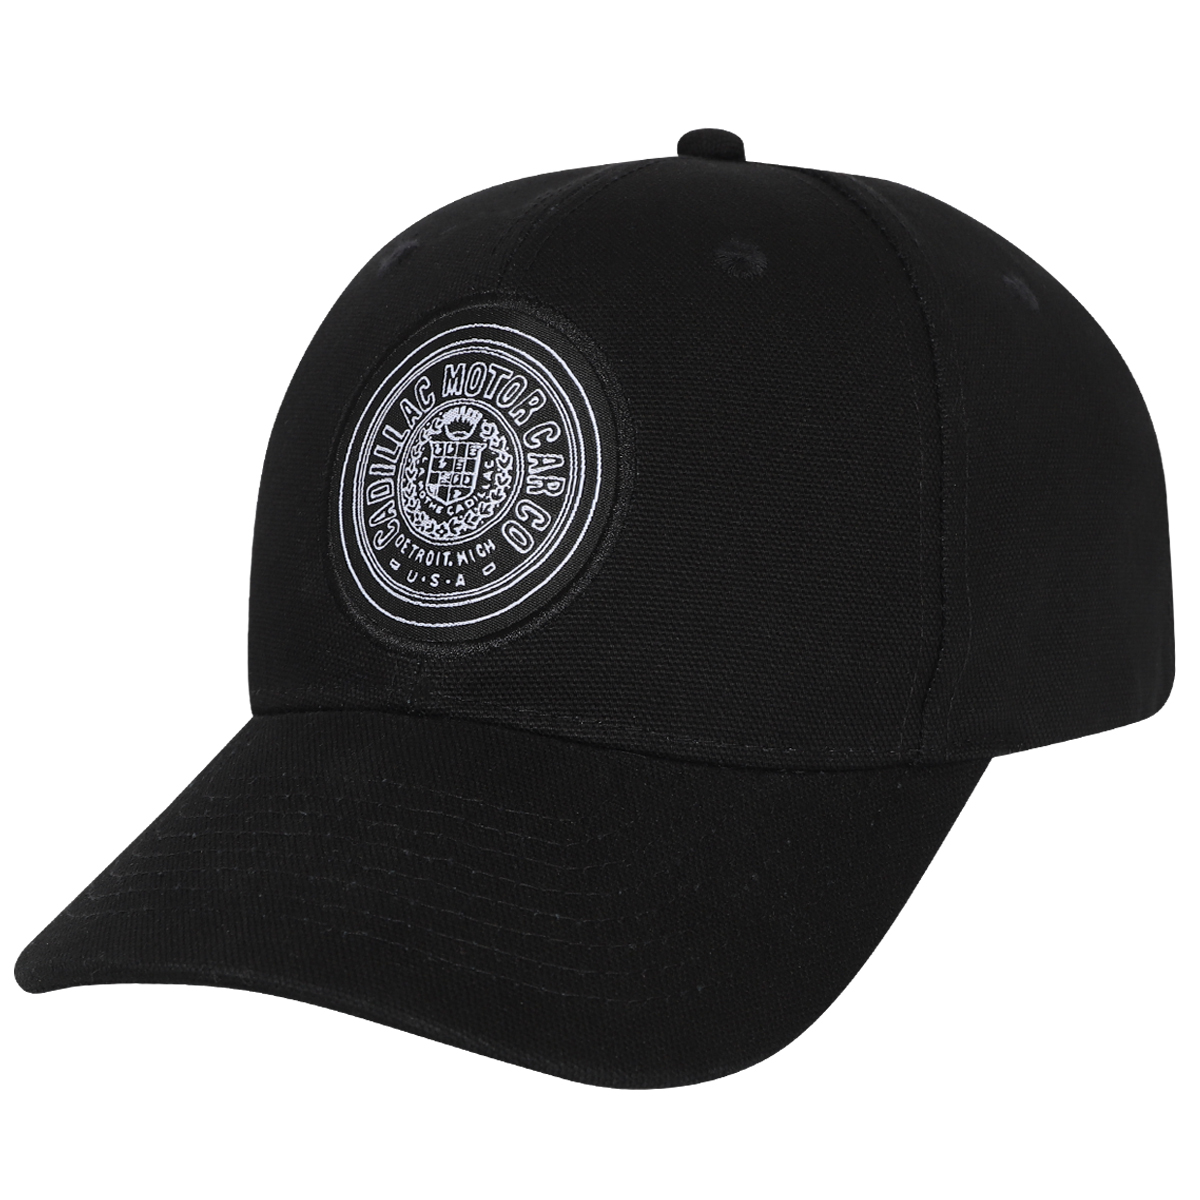 Heritage Black Hat